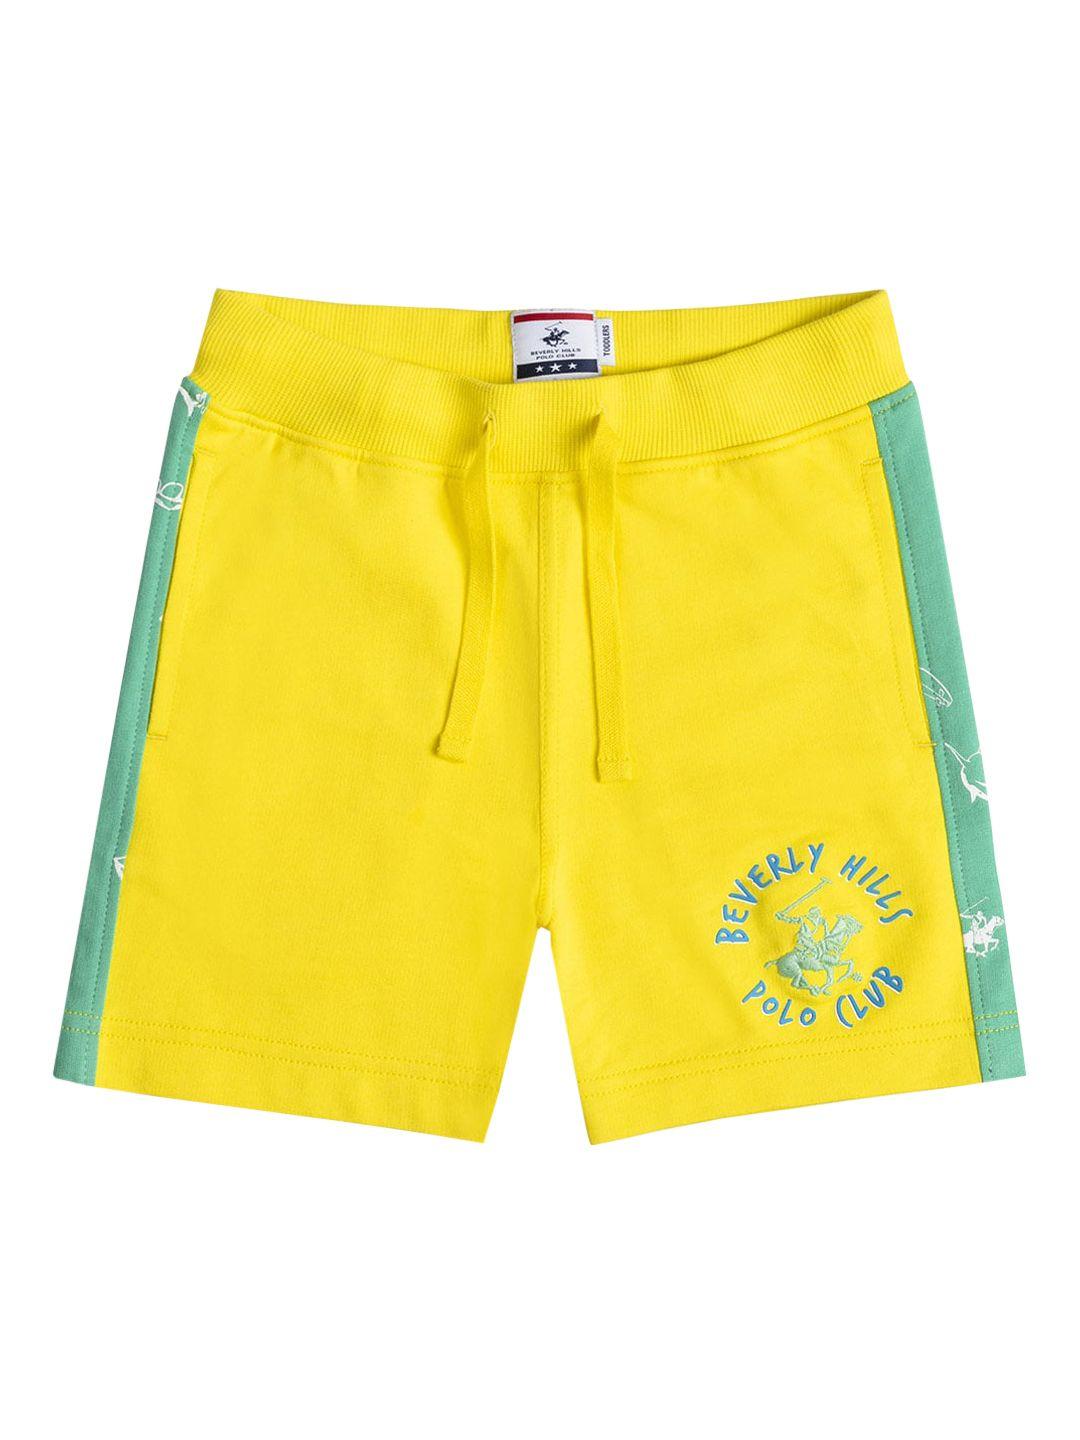 beverly hills polo club boys yellow & green colourblocked shorts